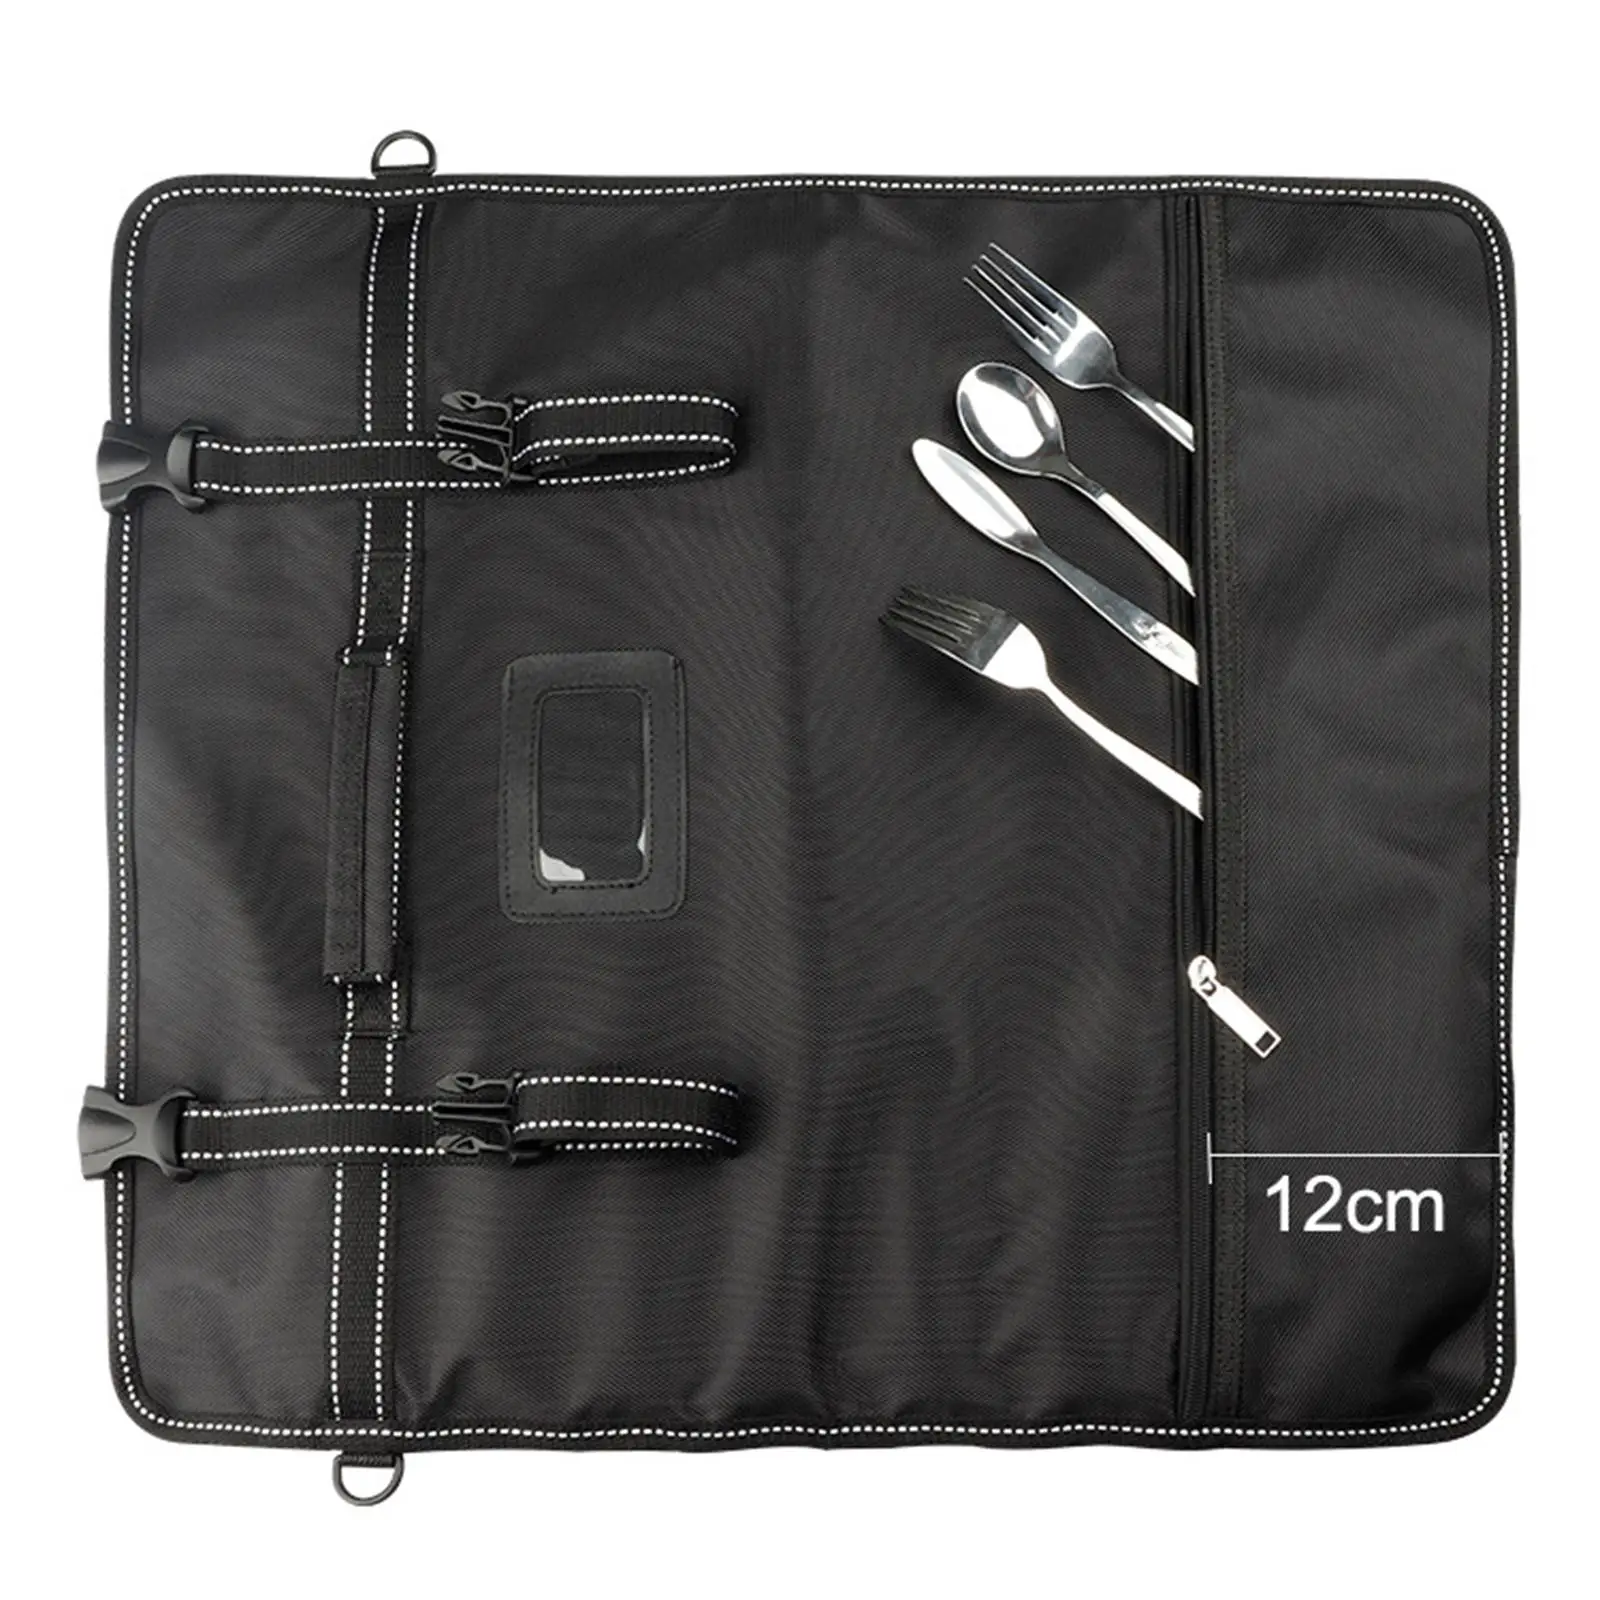 Chef Knives Roll Bag Adjustable Shoulder Strap Carrying Case Storage Bag for Kitchen Home Restaurant Chinese Western Food Knives